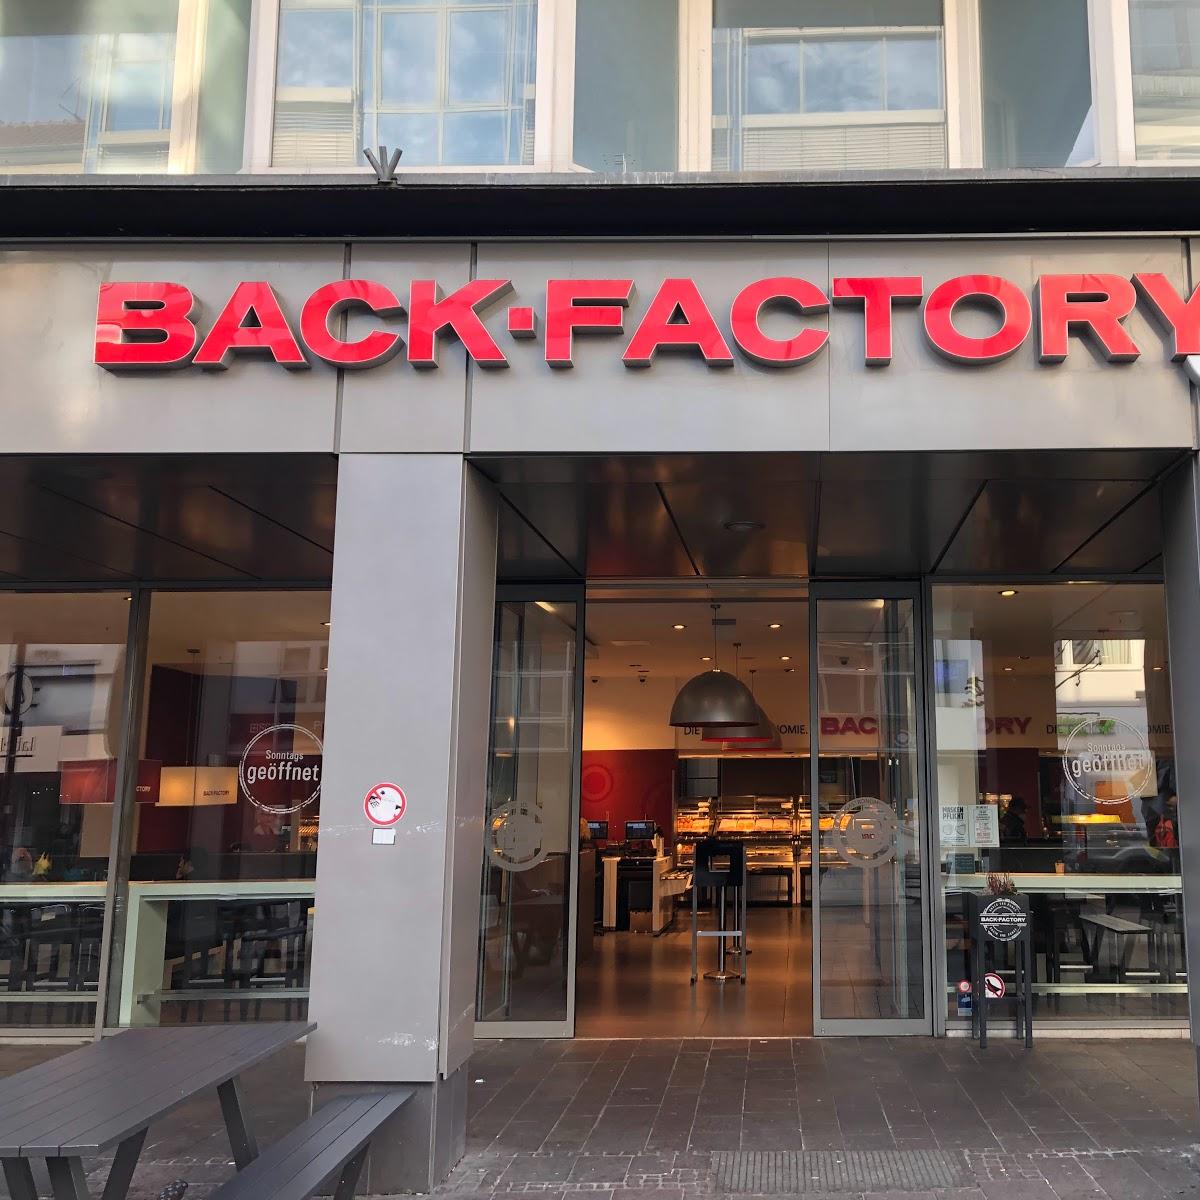 Restaurant "BACK-FACTORY" in Paderborn